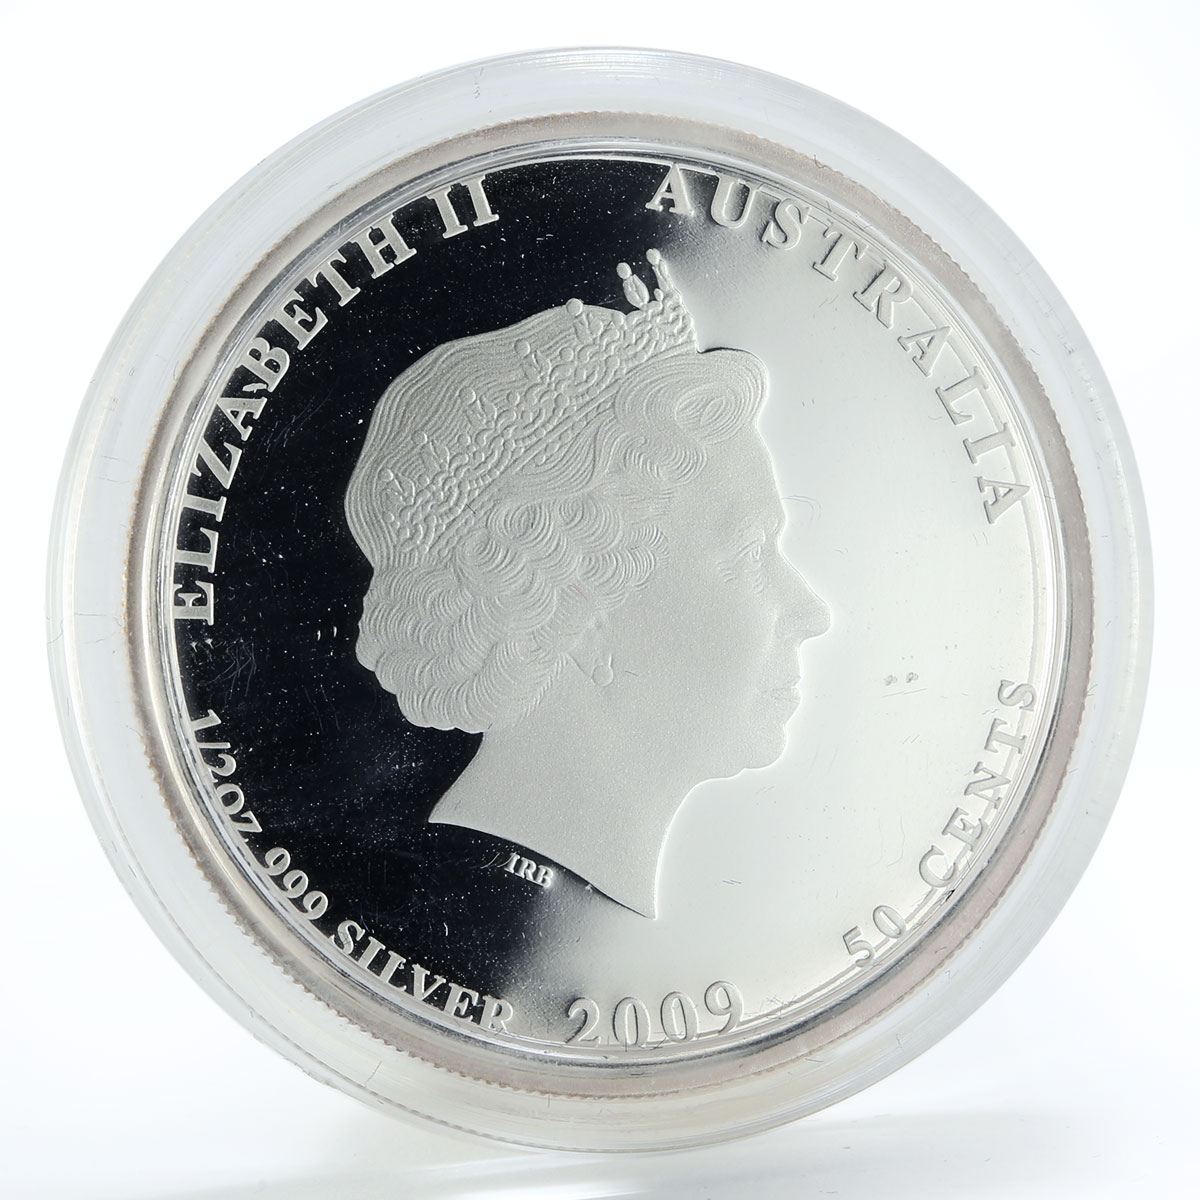 Australia 50 cents Sea Life Series - Lion Fish silver coin 2009